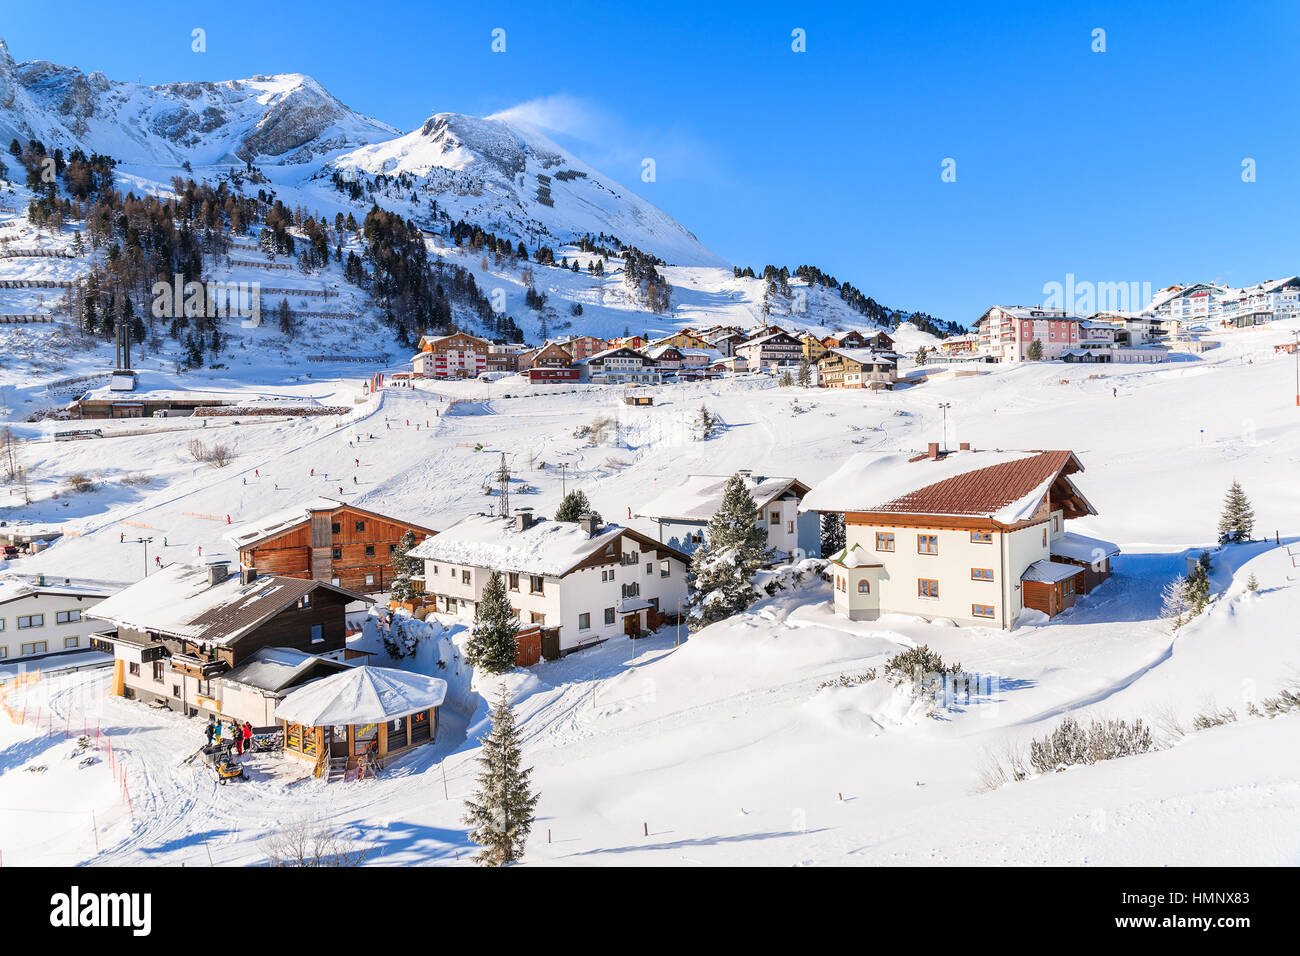 View of Obertauern mountain village in winter scenery, Austria Stock Photo